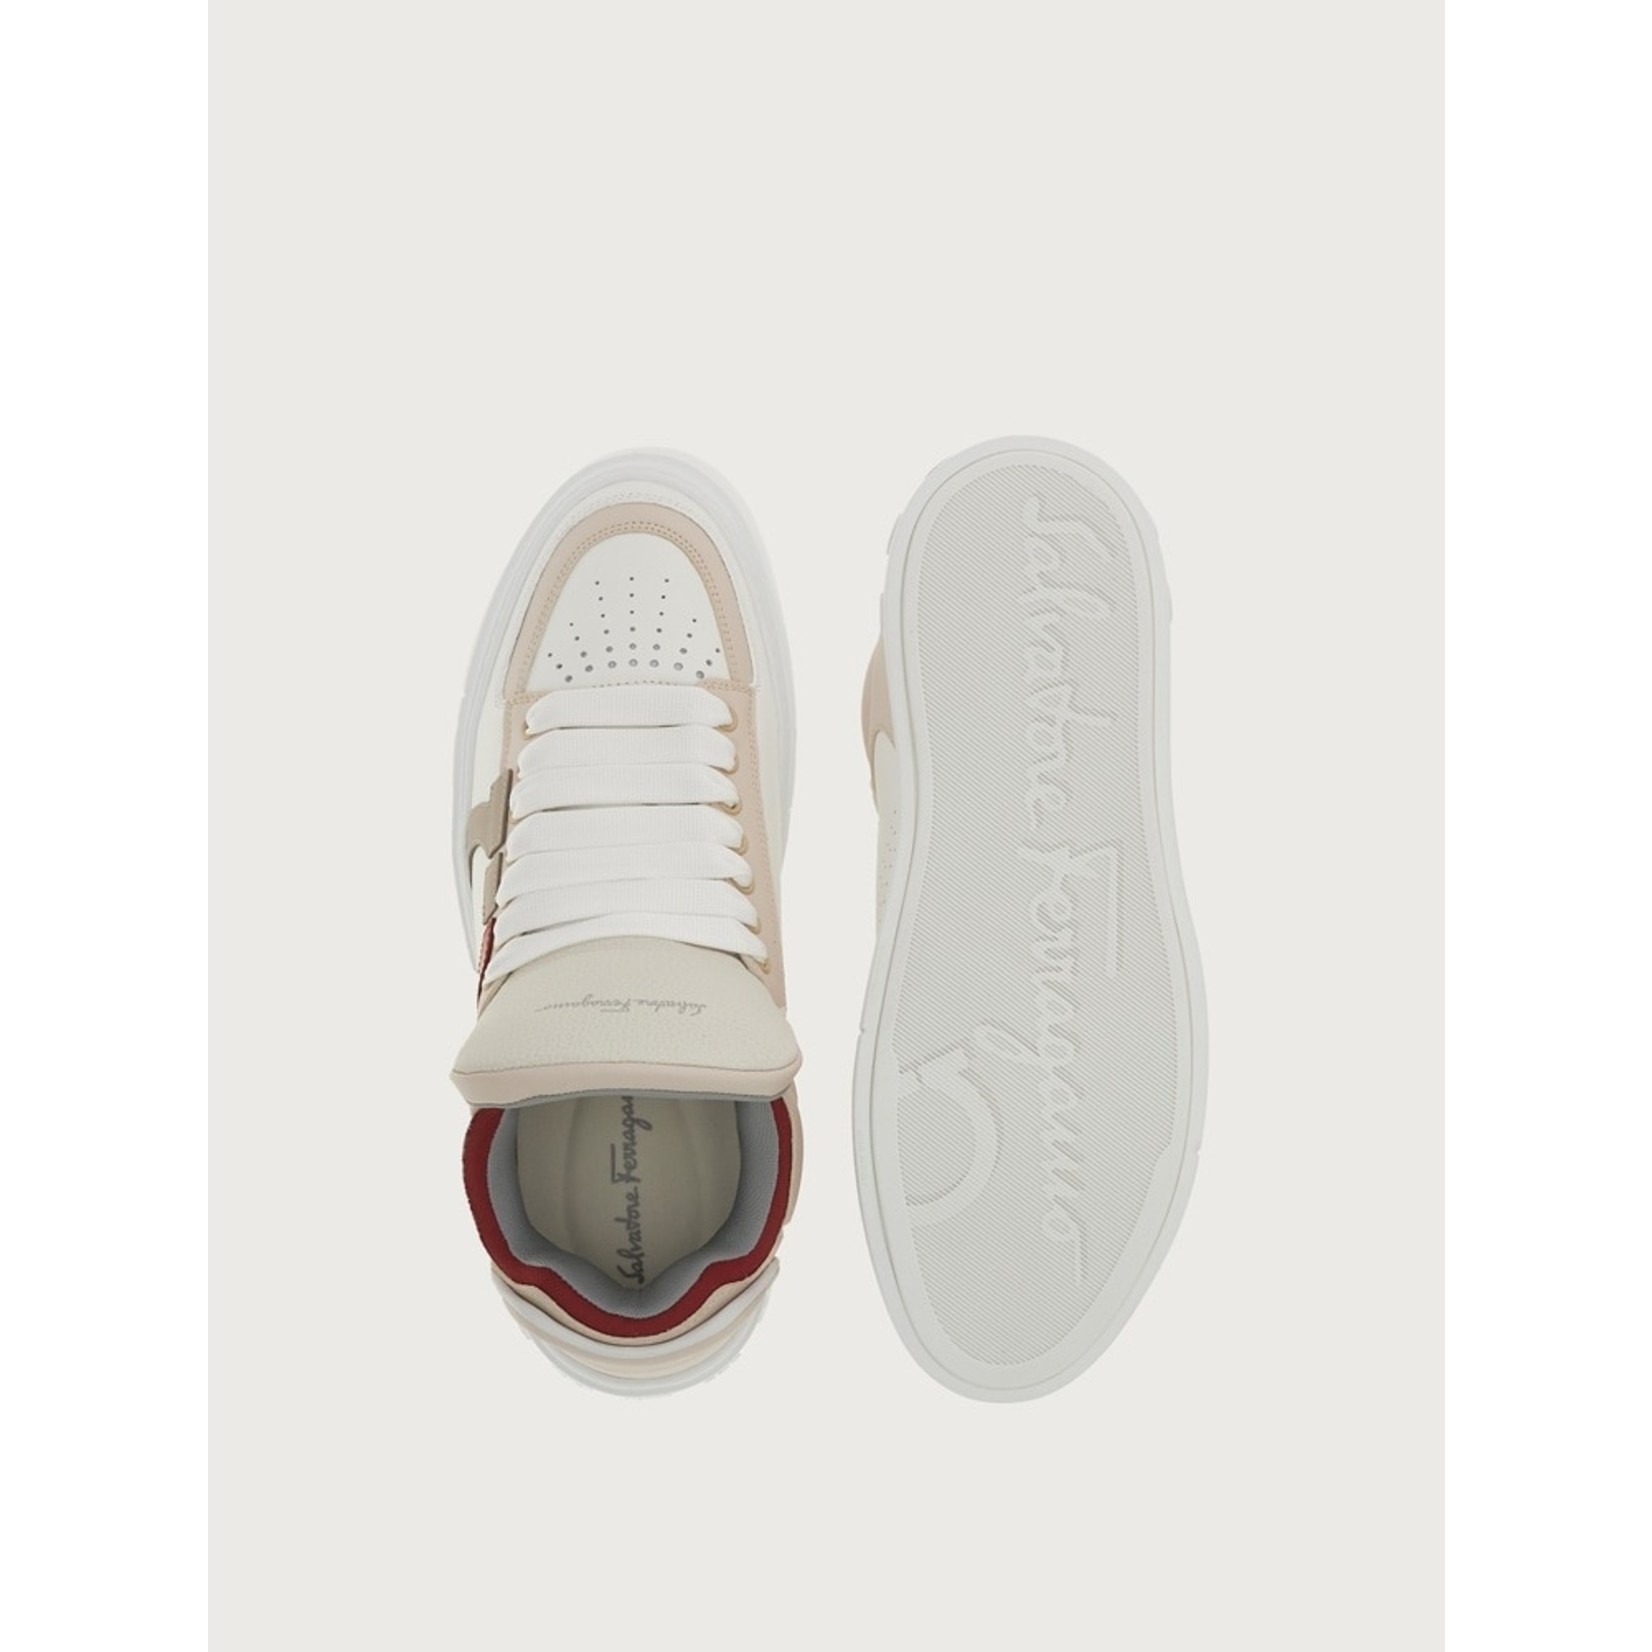 New Salvatore Ferragamo Men's Marvelous Tennis Shoes Size 9 Snickers